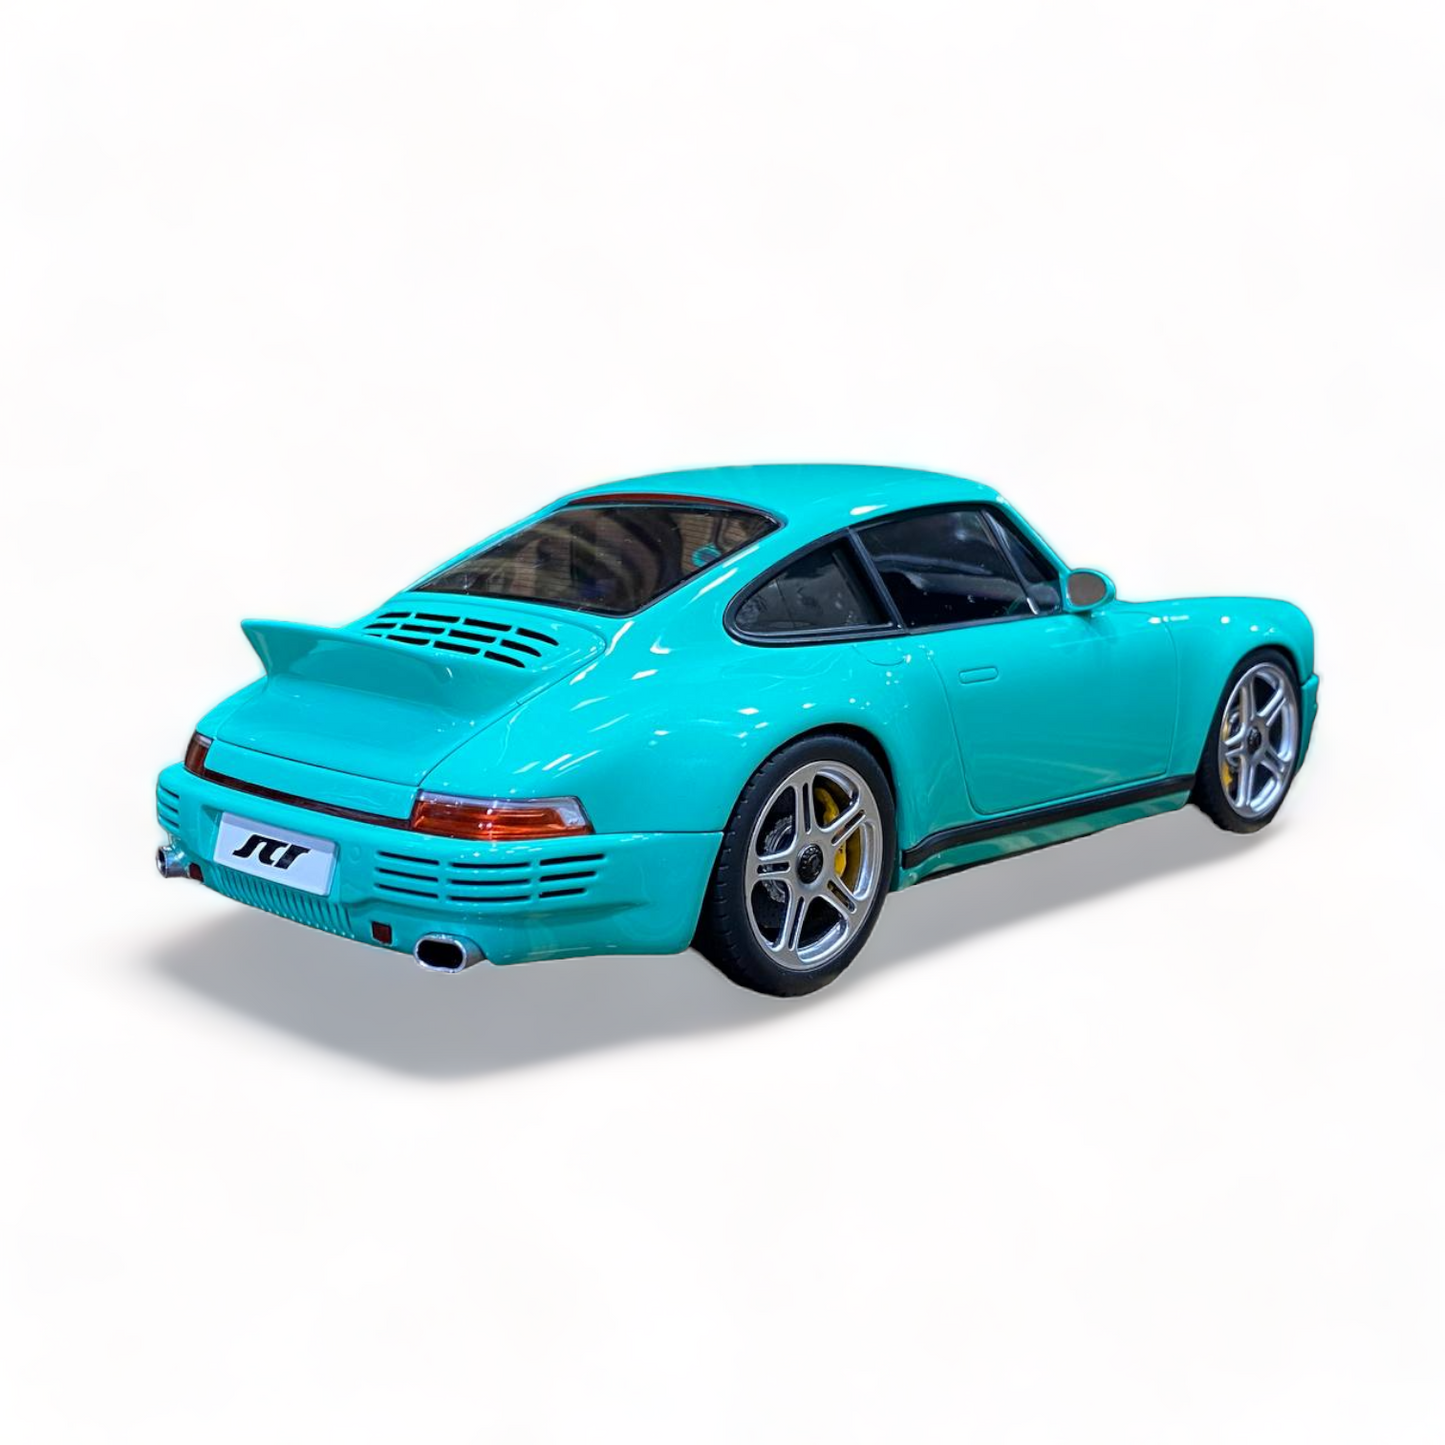 1/18 diecast Porsche RUF SCR Almost Real Scale Model Car|Sold in Dturman.com Dubai UAE.